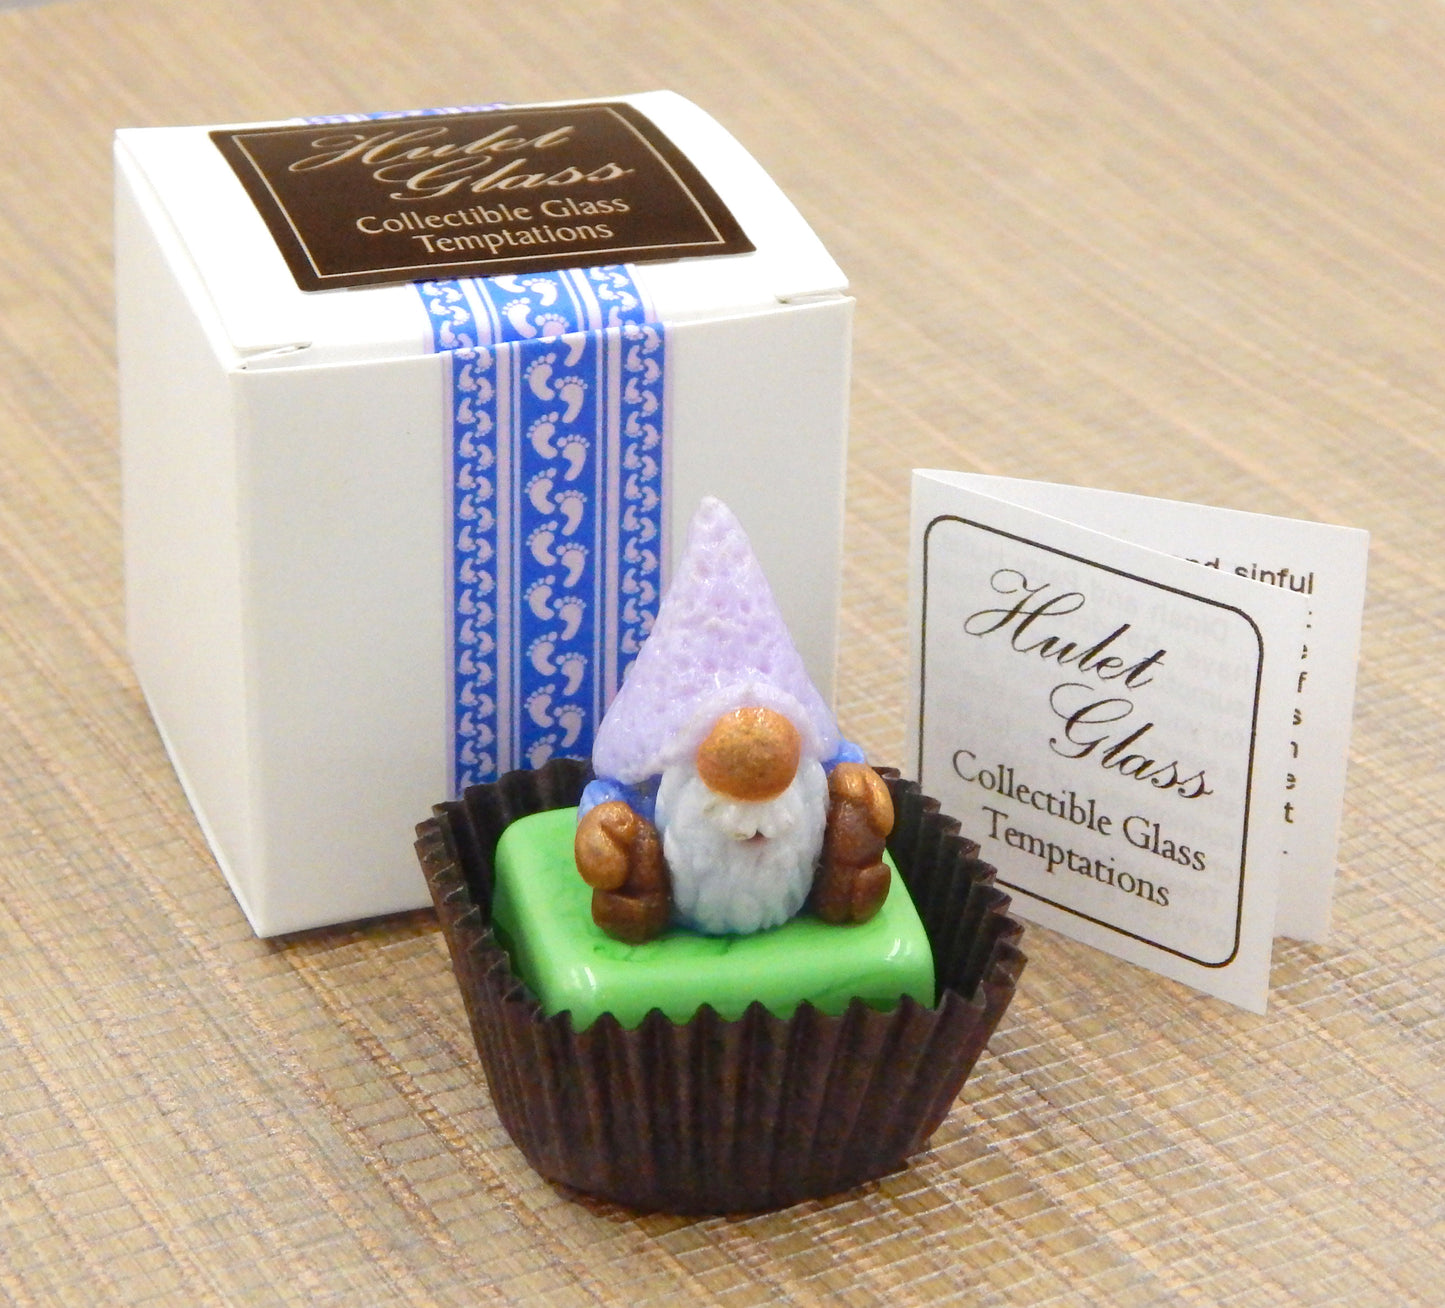 Gnome with Lavender Hat Petit Four (22-301M)